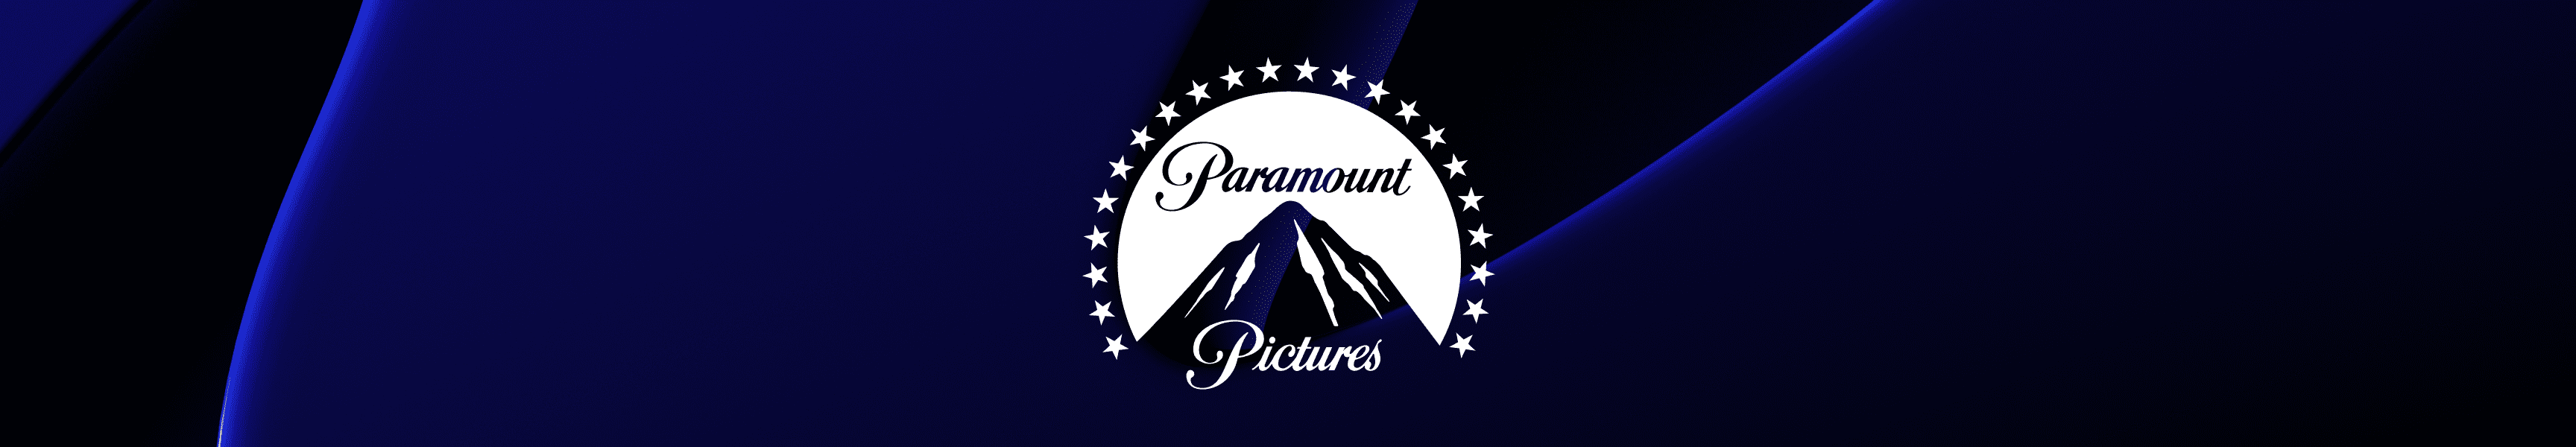 Paramount Pictures Wandkunst